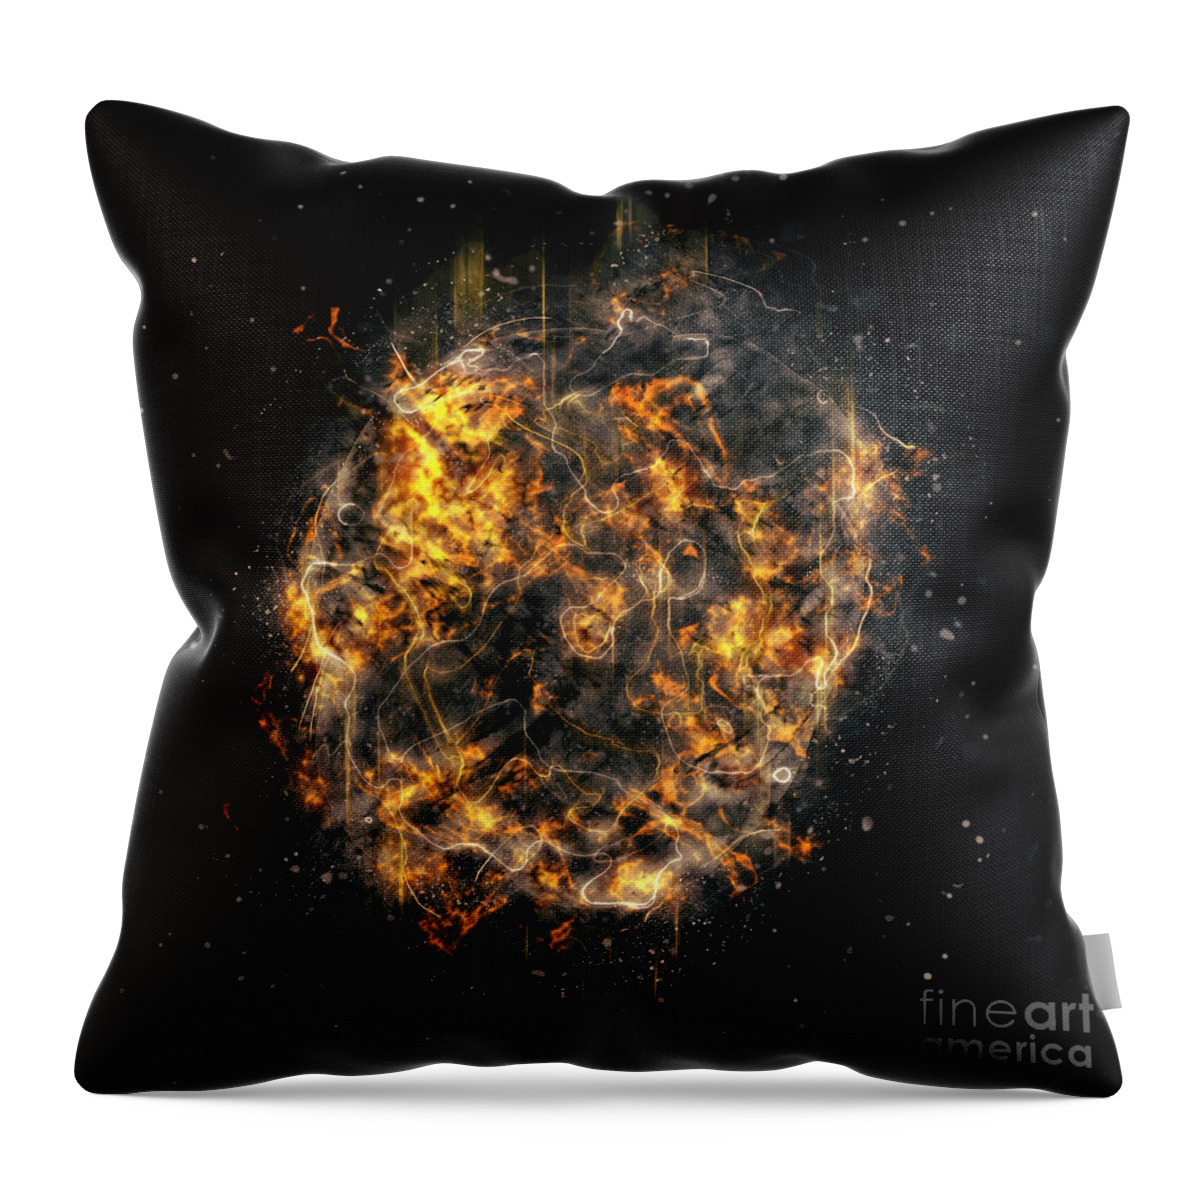 Genesis Throw Pillow featuring the digital art Digitally created Exploding supernova star by Ilan Rosen